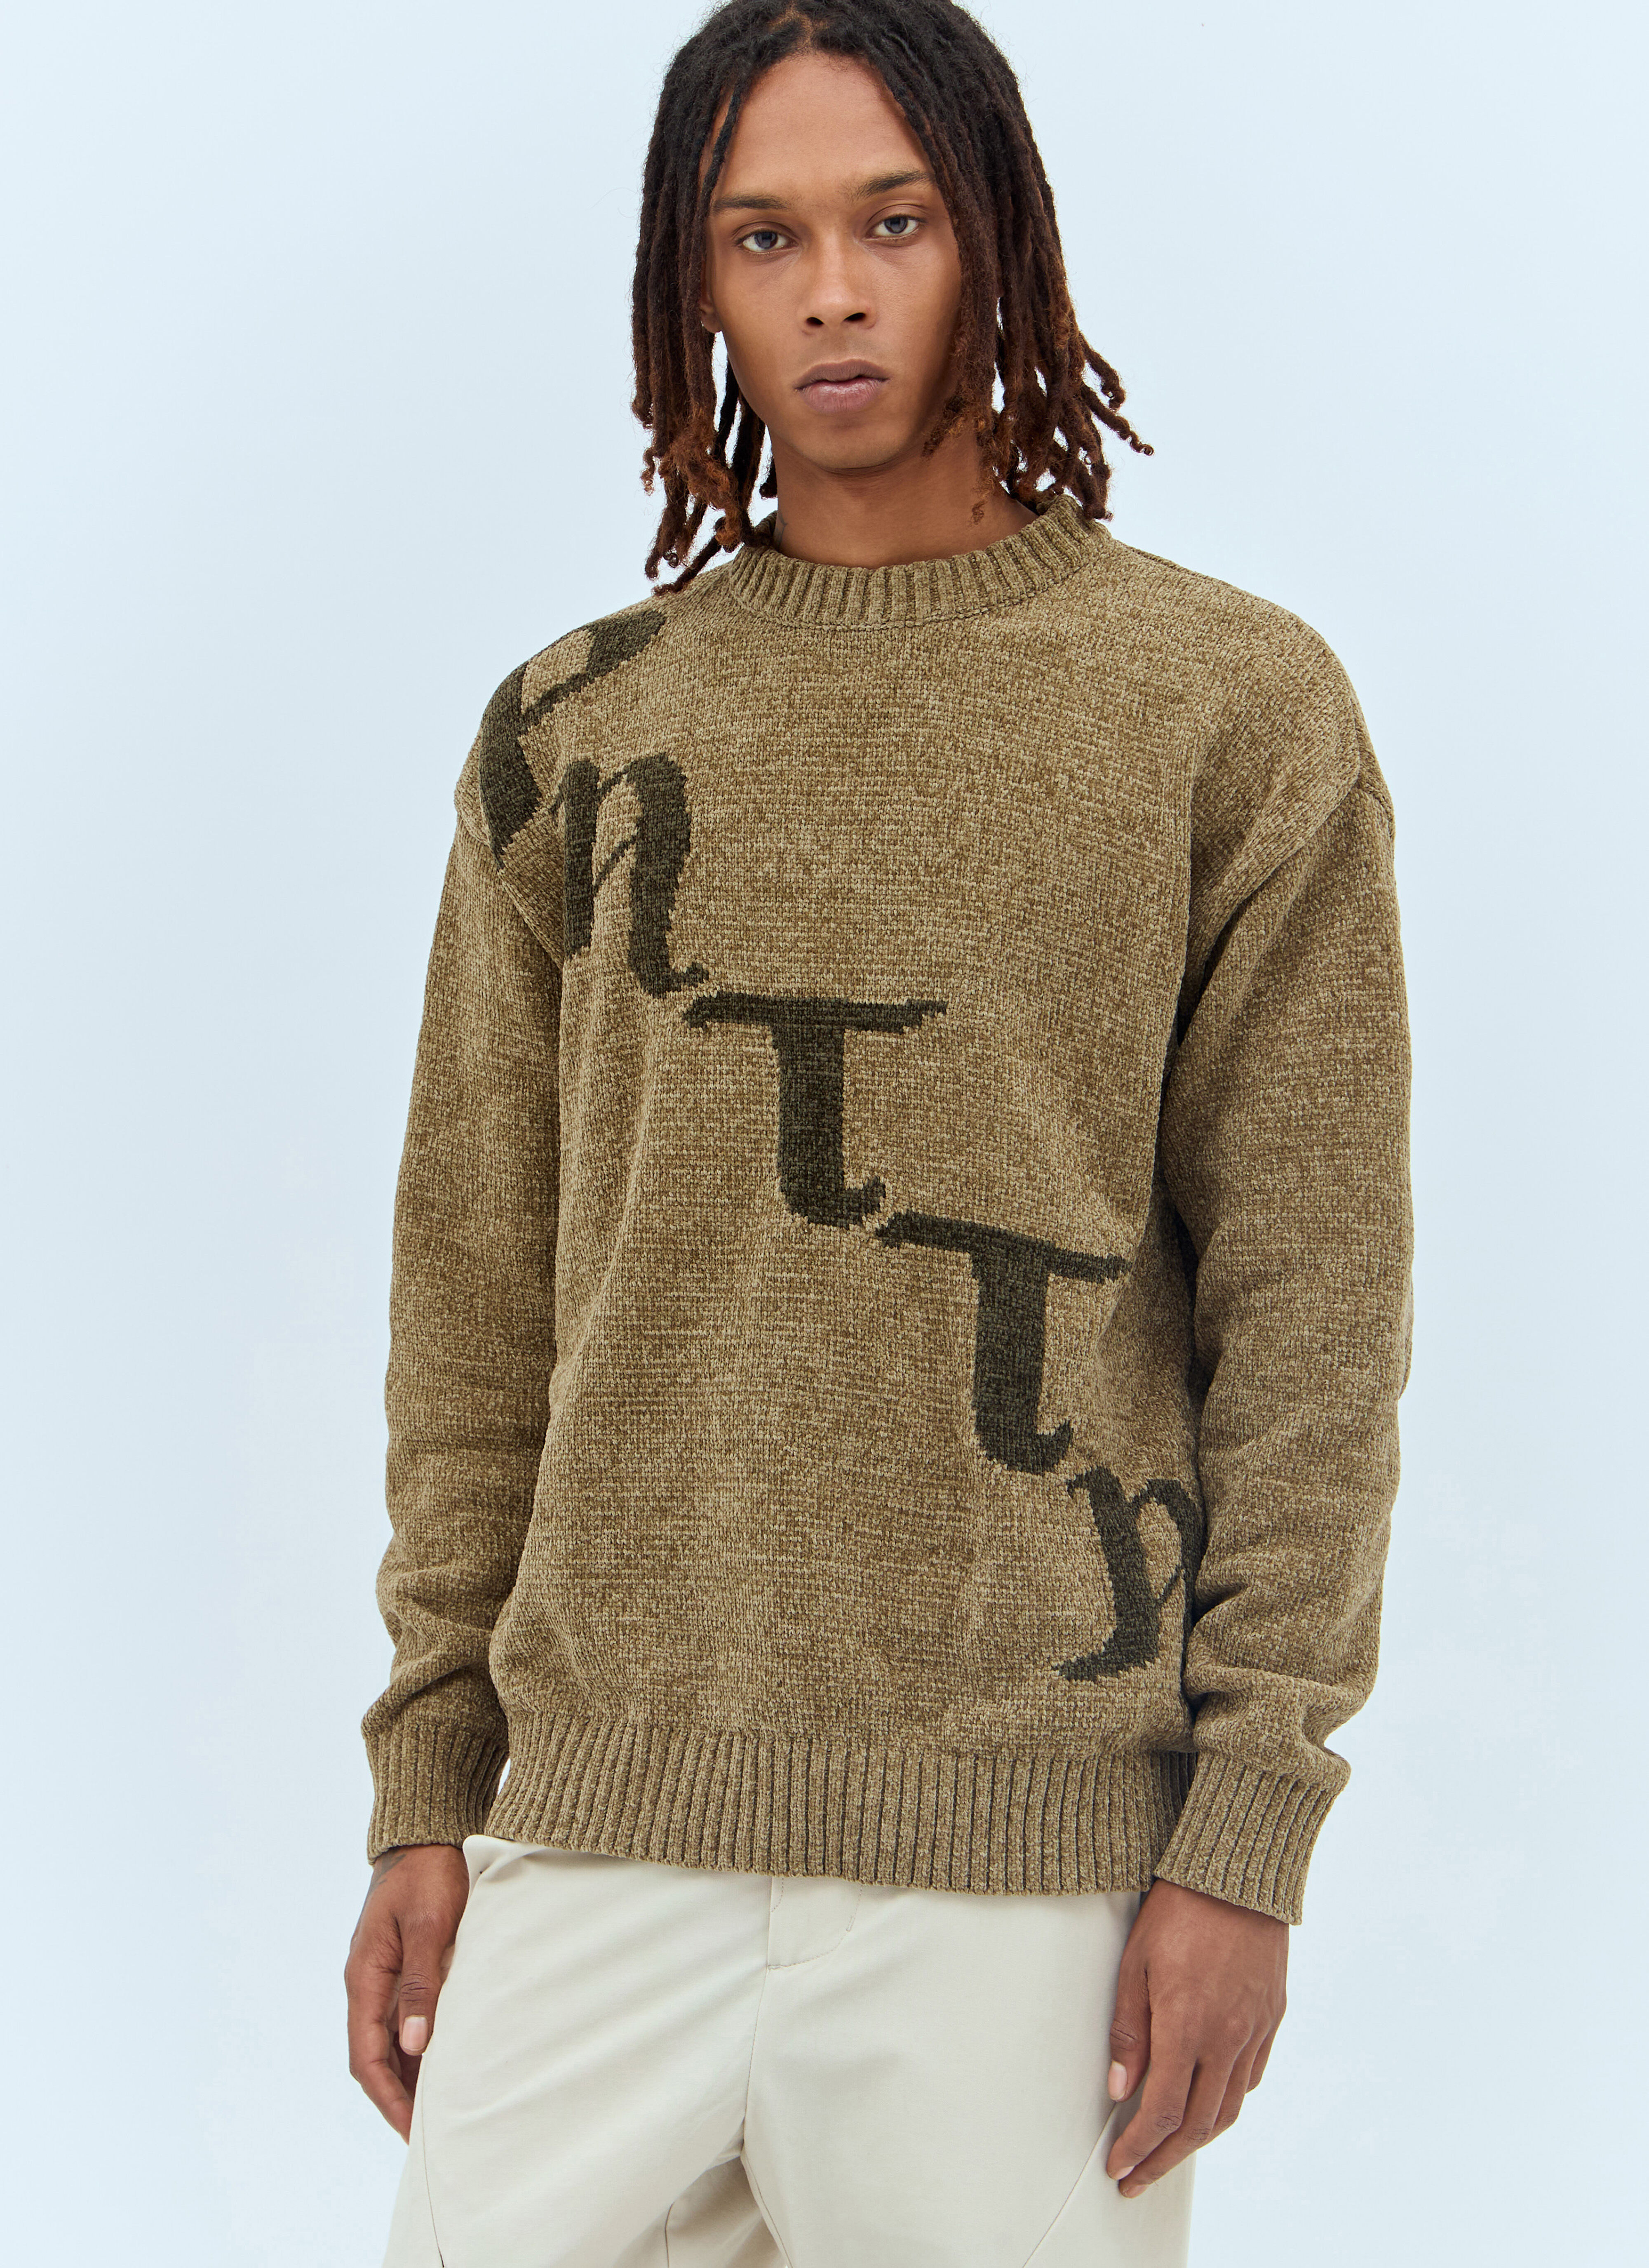 Patta Chenille Knit Sweater Grey pat0156006